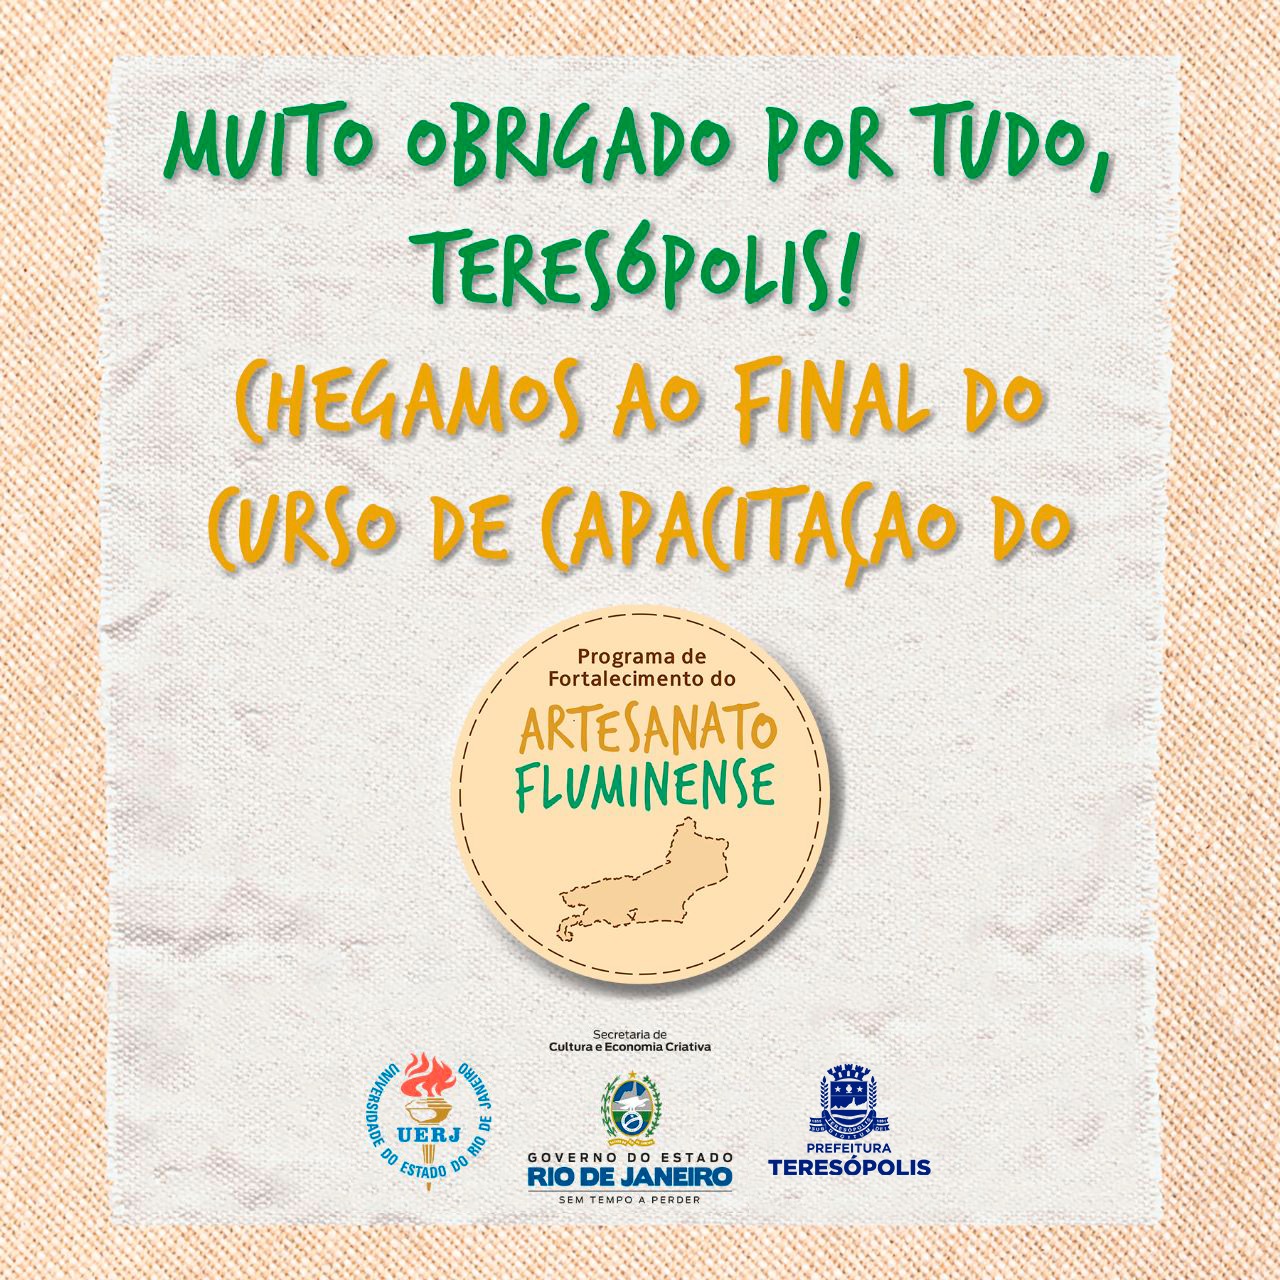 You are currently viewing Programa de Fortalecimento do Artesanato Fluminense encerra curso em Teresópolis